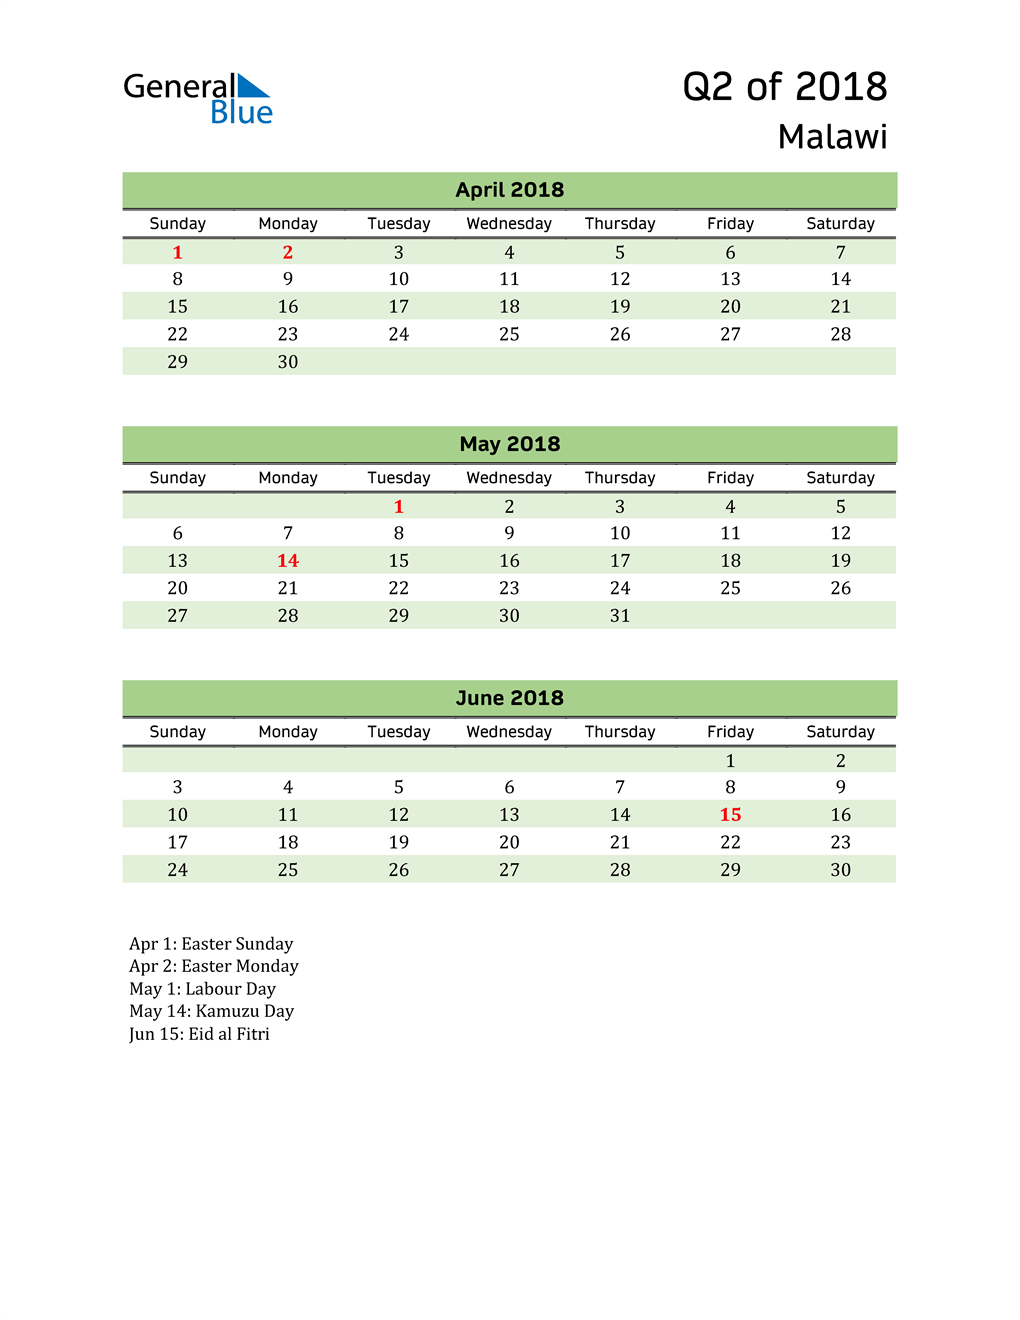  Quarterly Calendar 2018 with Malawi Holidays 